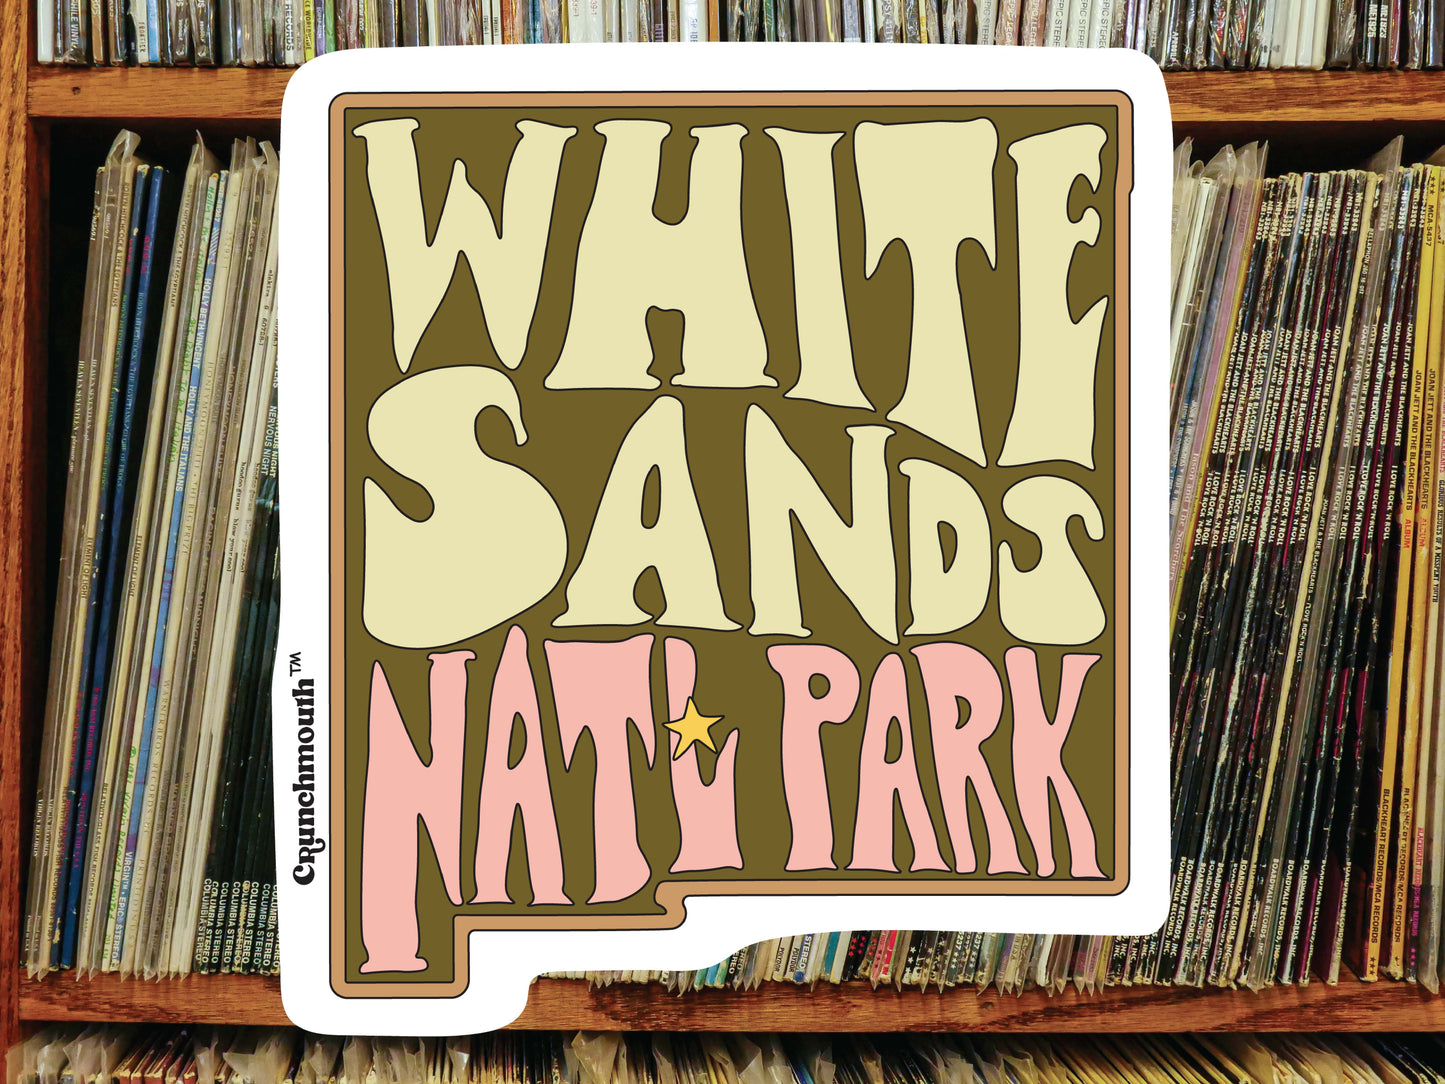 white sands national park water bottle sticker, vinyl record shelf background